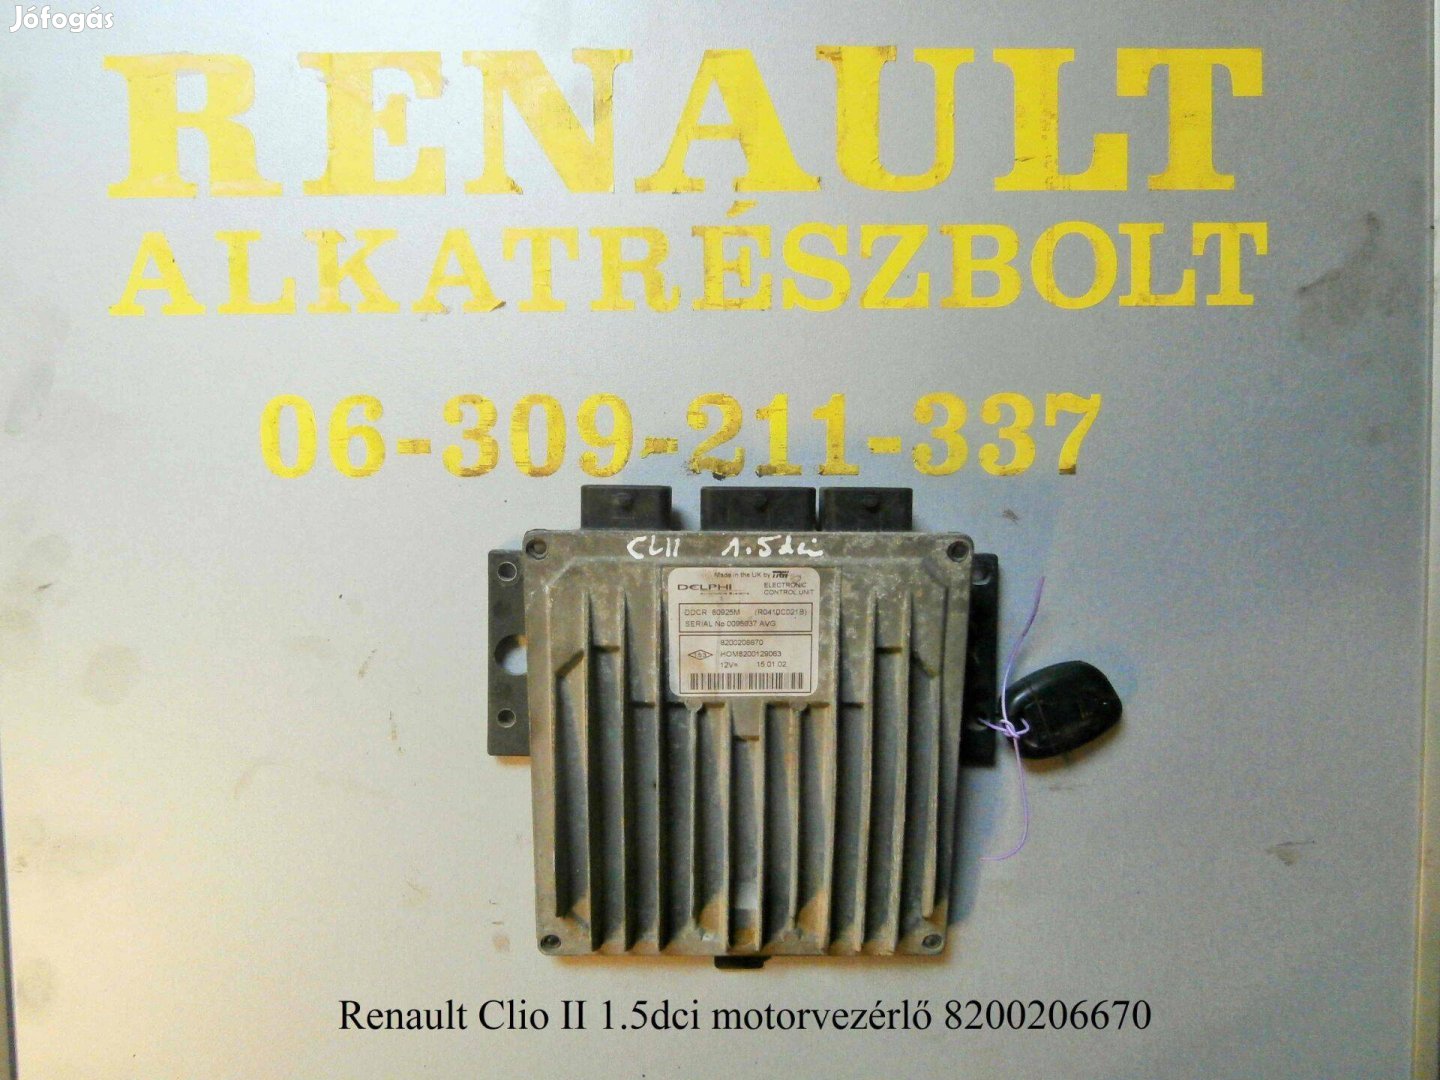 Renault Clio II 1.5dci motorvezérlő 8200206670